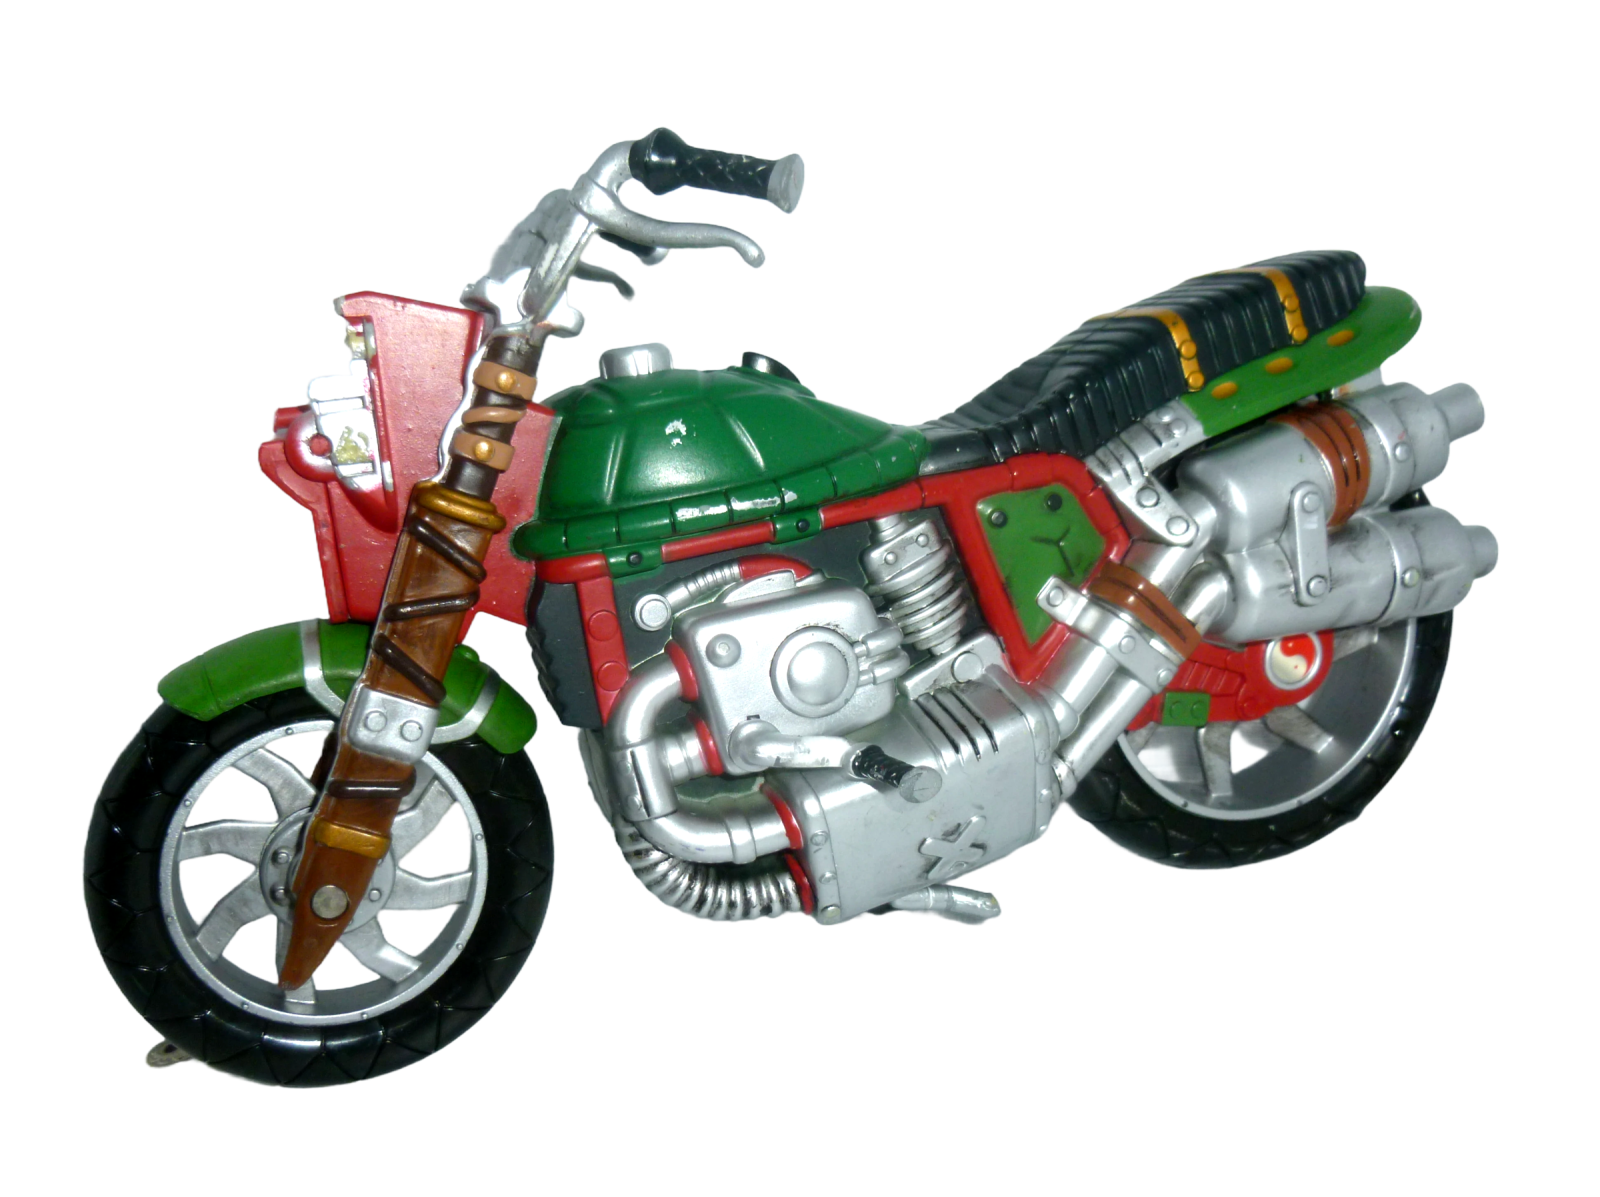 Motorcycle - defekt 2002 Mirage Studios / Playmates Toys 2